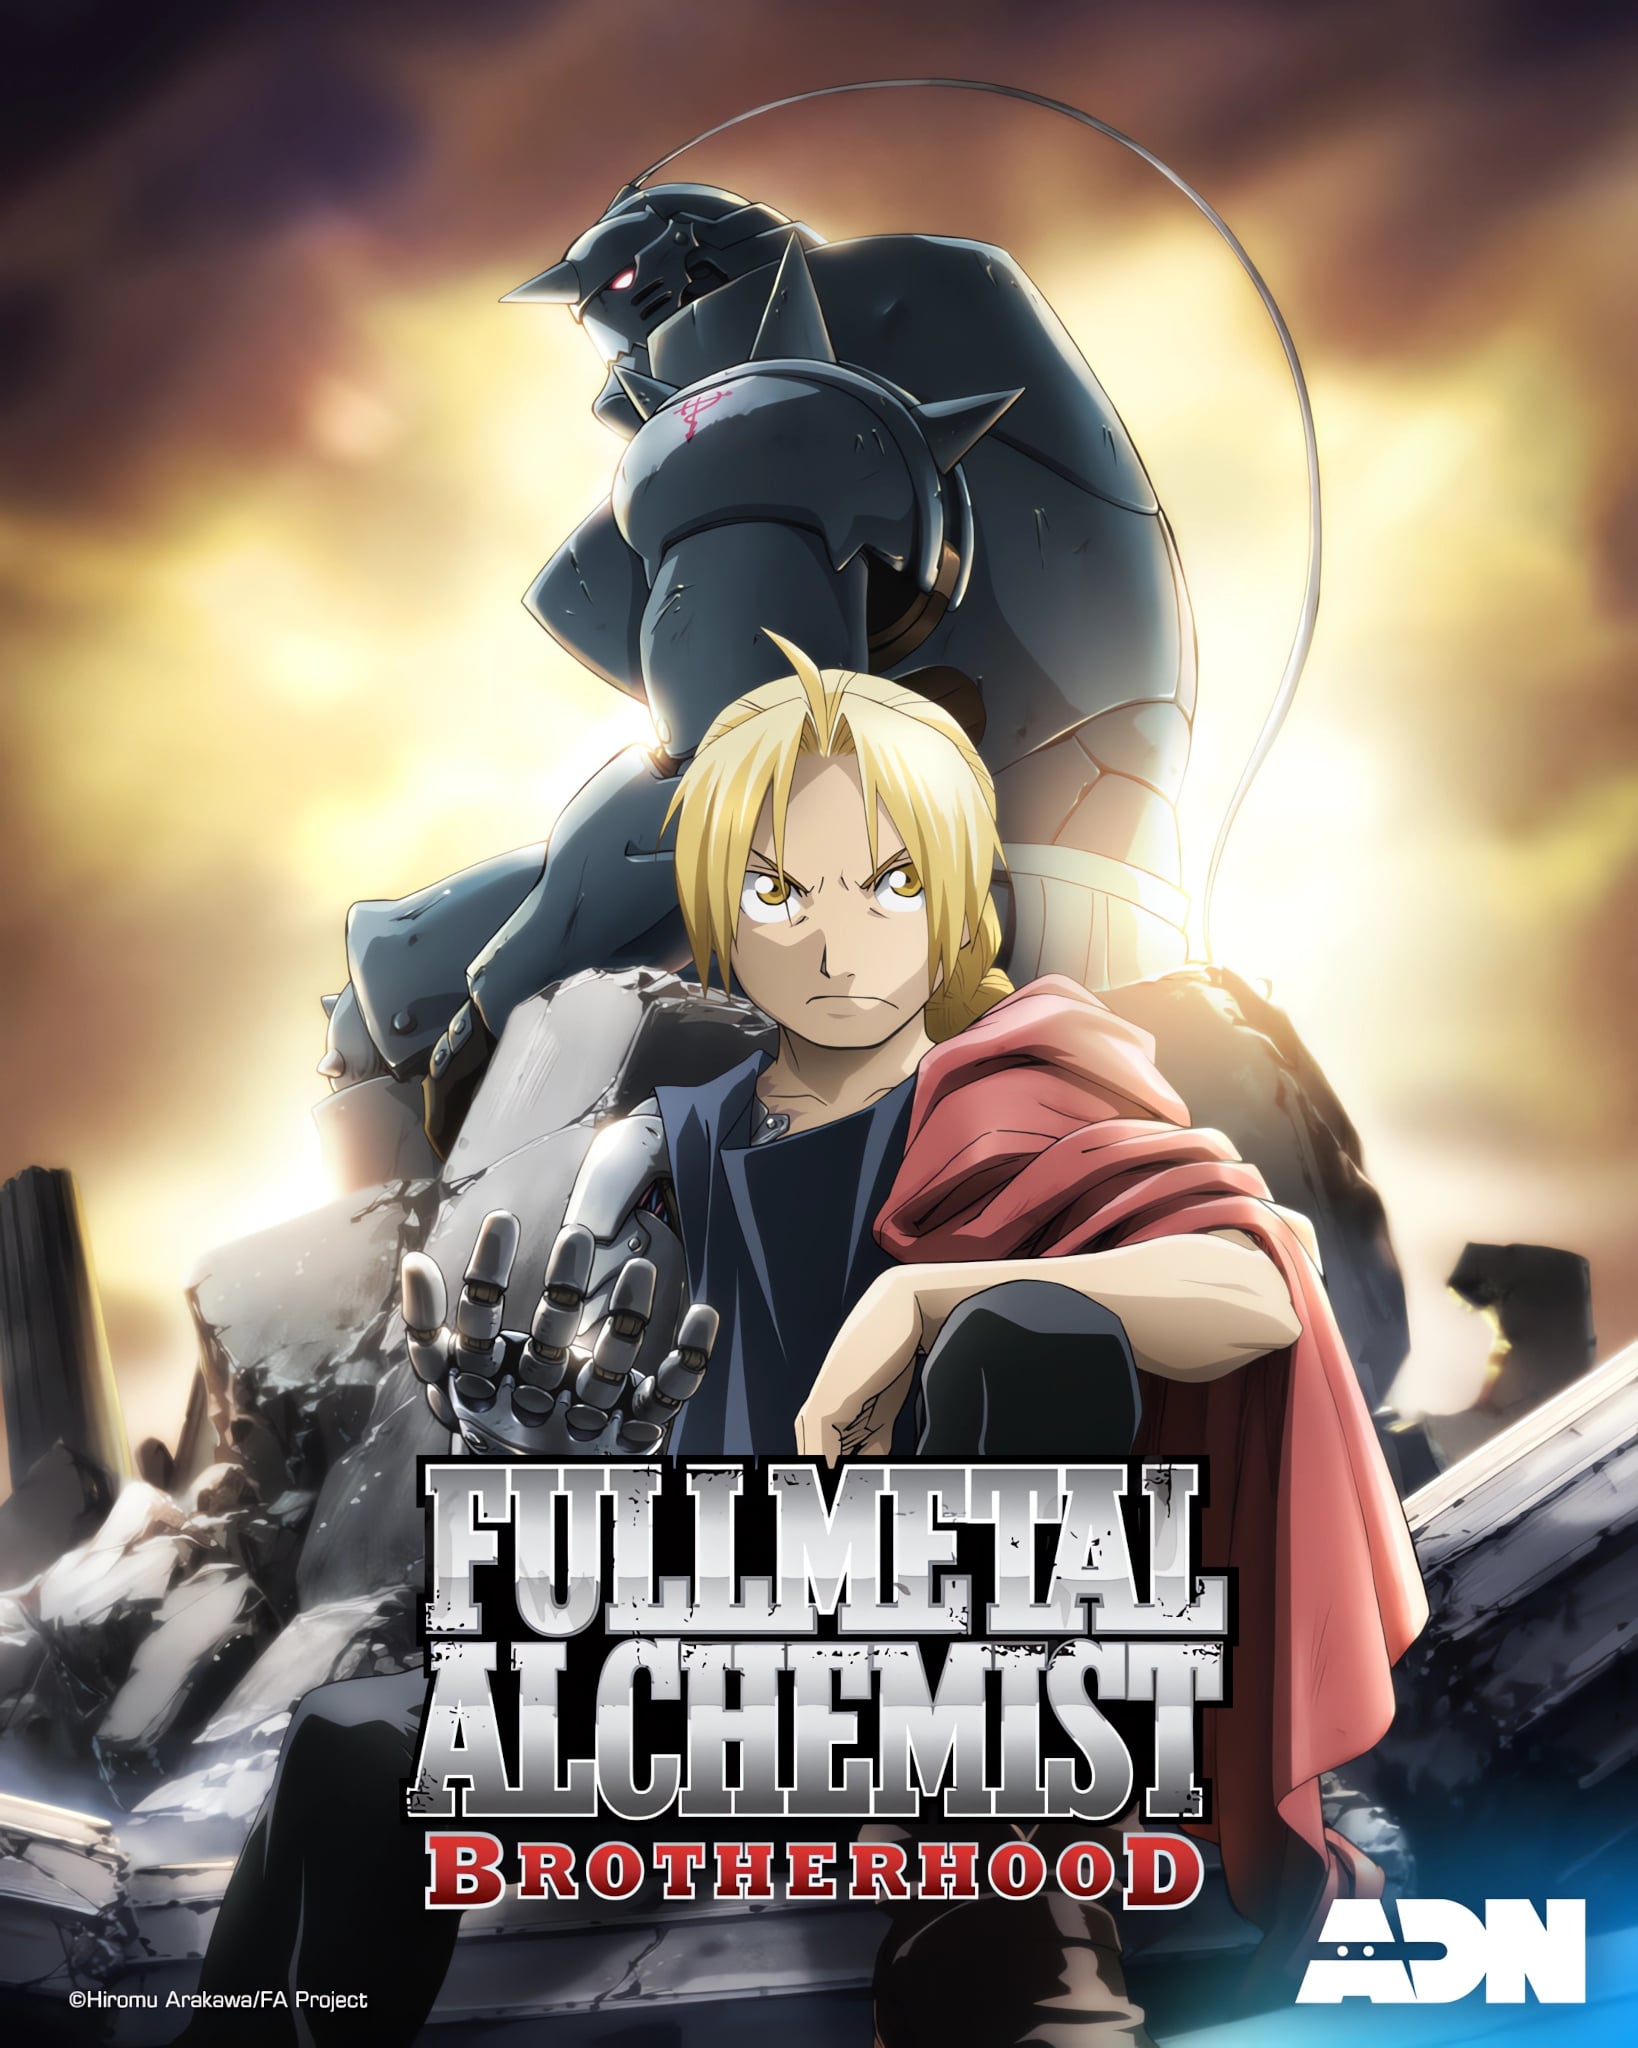 Visuel de lanime Fullmetal Alchemist : Brotherhood sur ADN